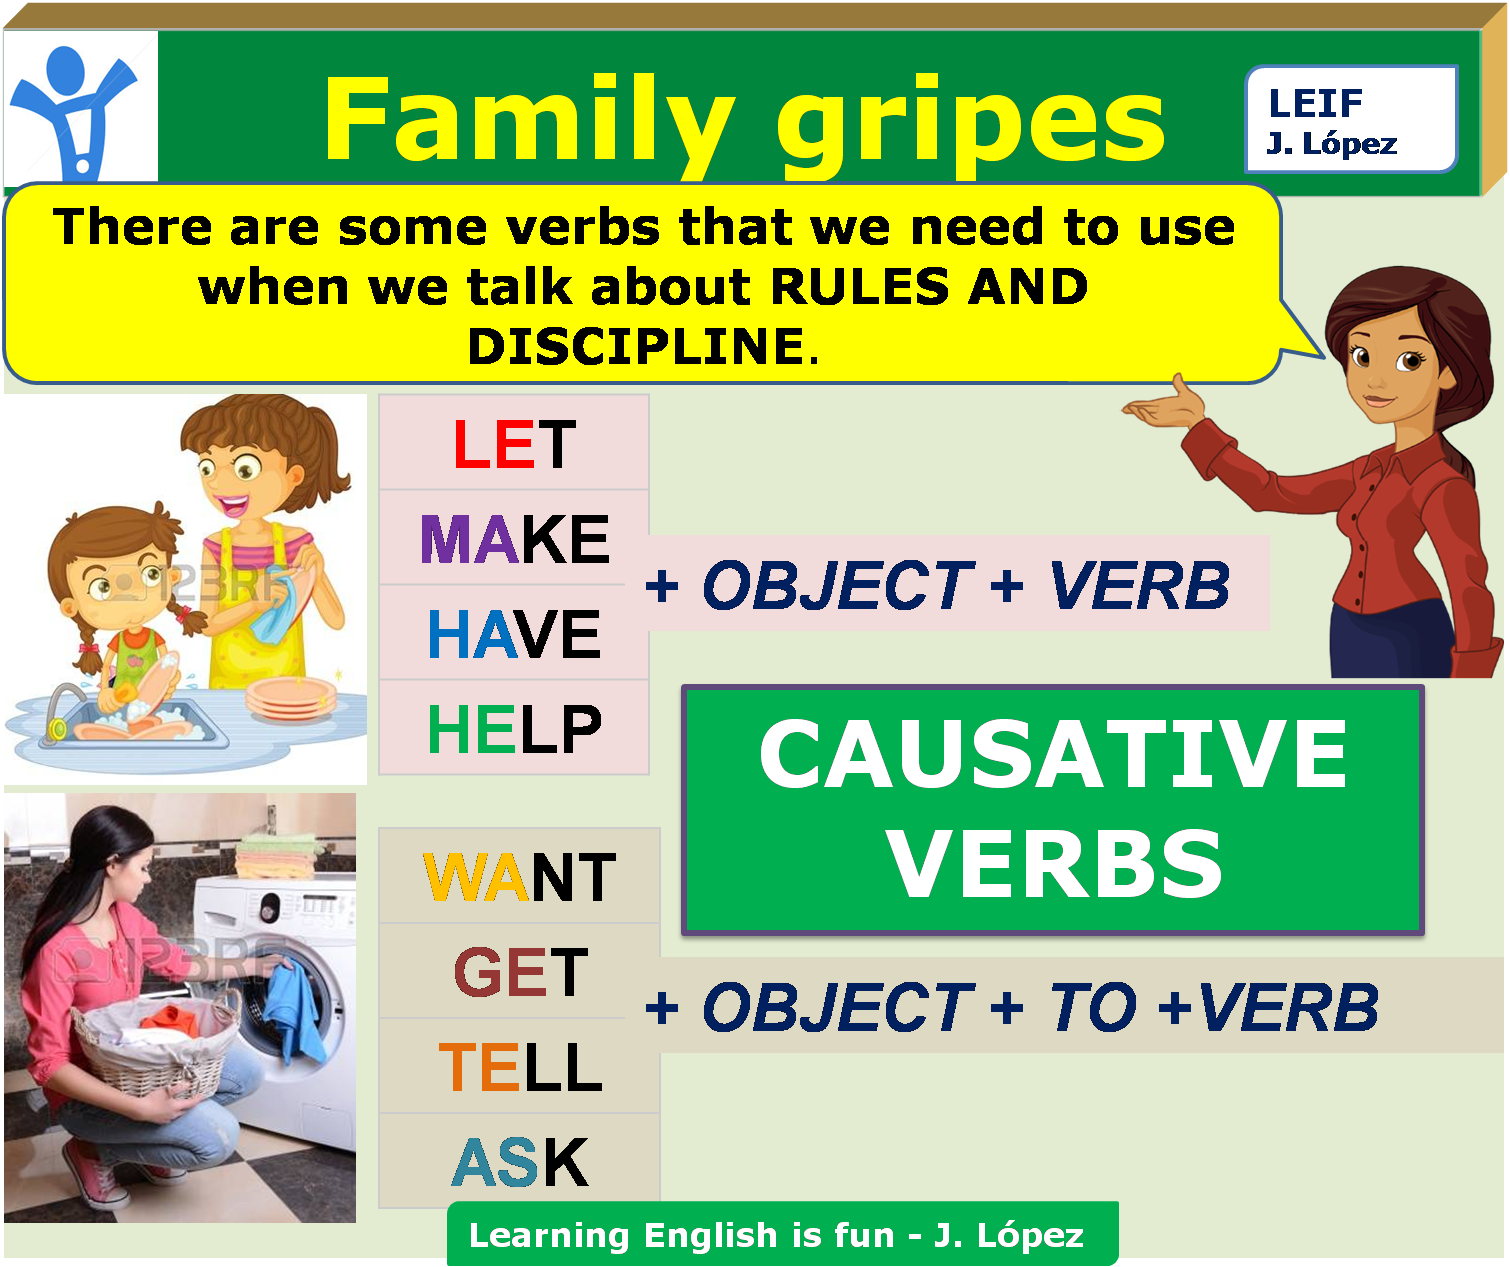 Causative verbs. Make get have правило. Causative verbs в английском языке. Каузативные глаголы. English verbs intermediate